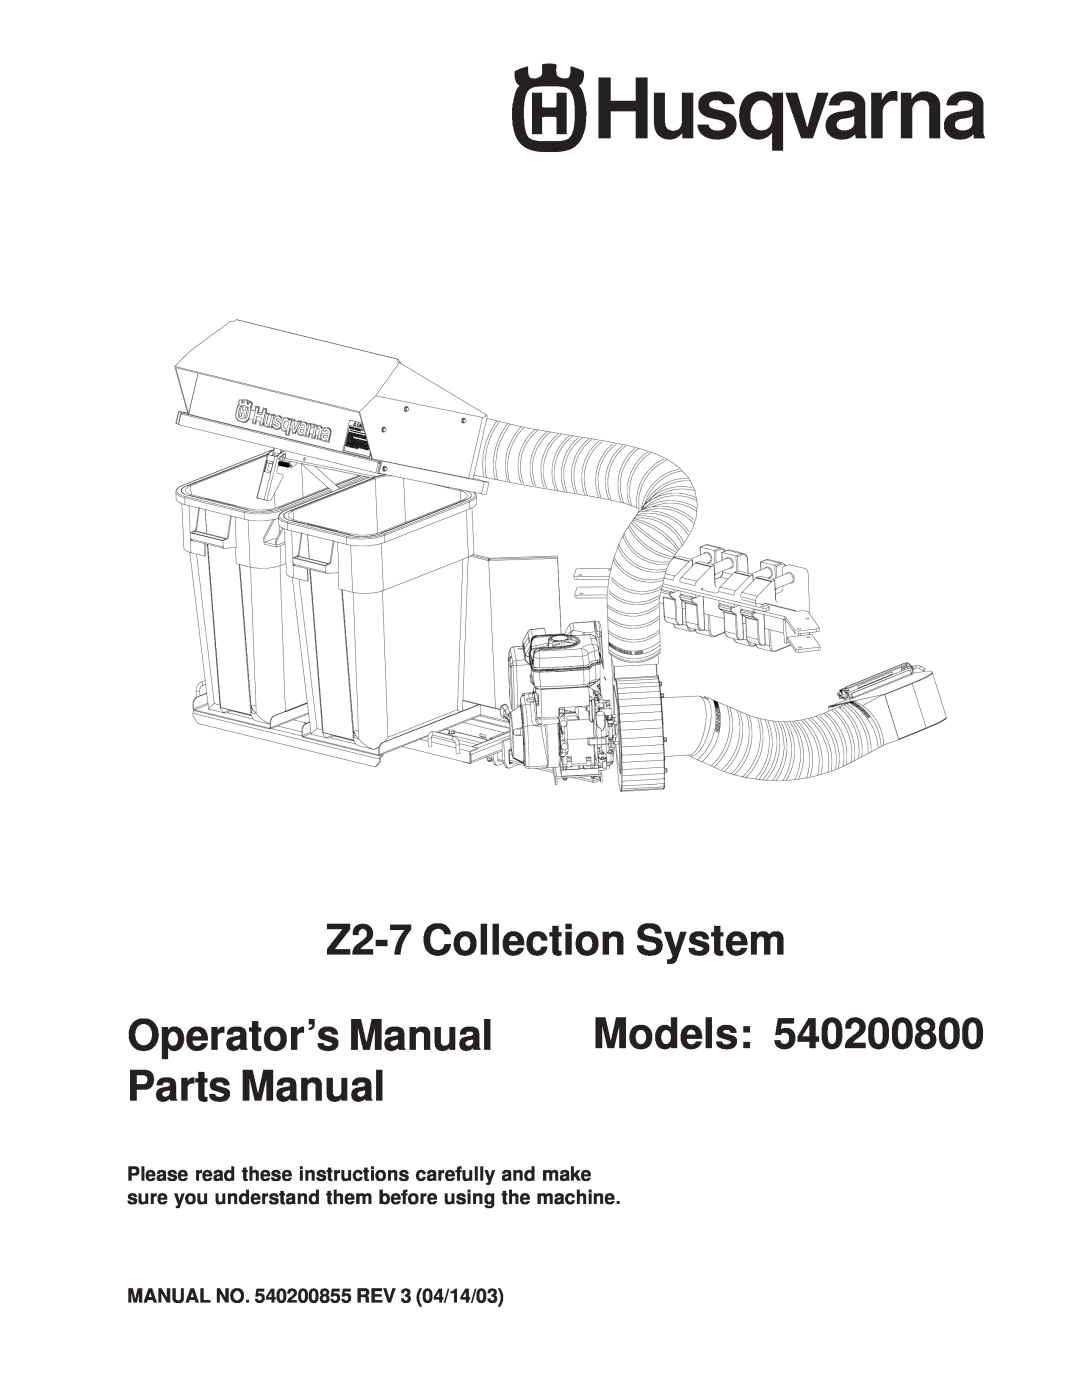 Husqvarna 540200800 system manual Z2-7Collection System, Operator’s Manual, Models, Parts Manual 